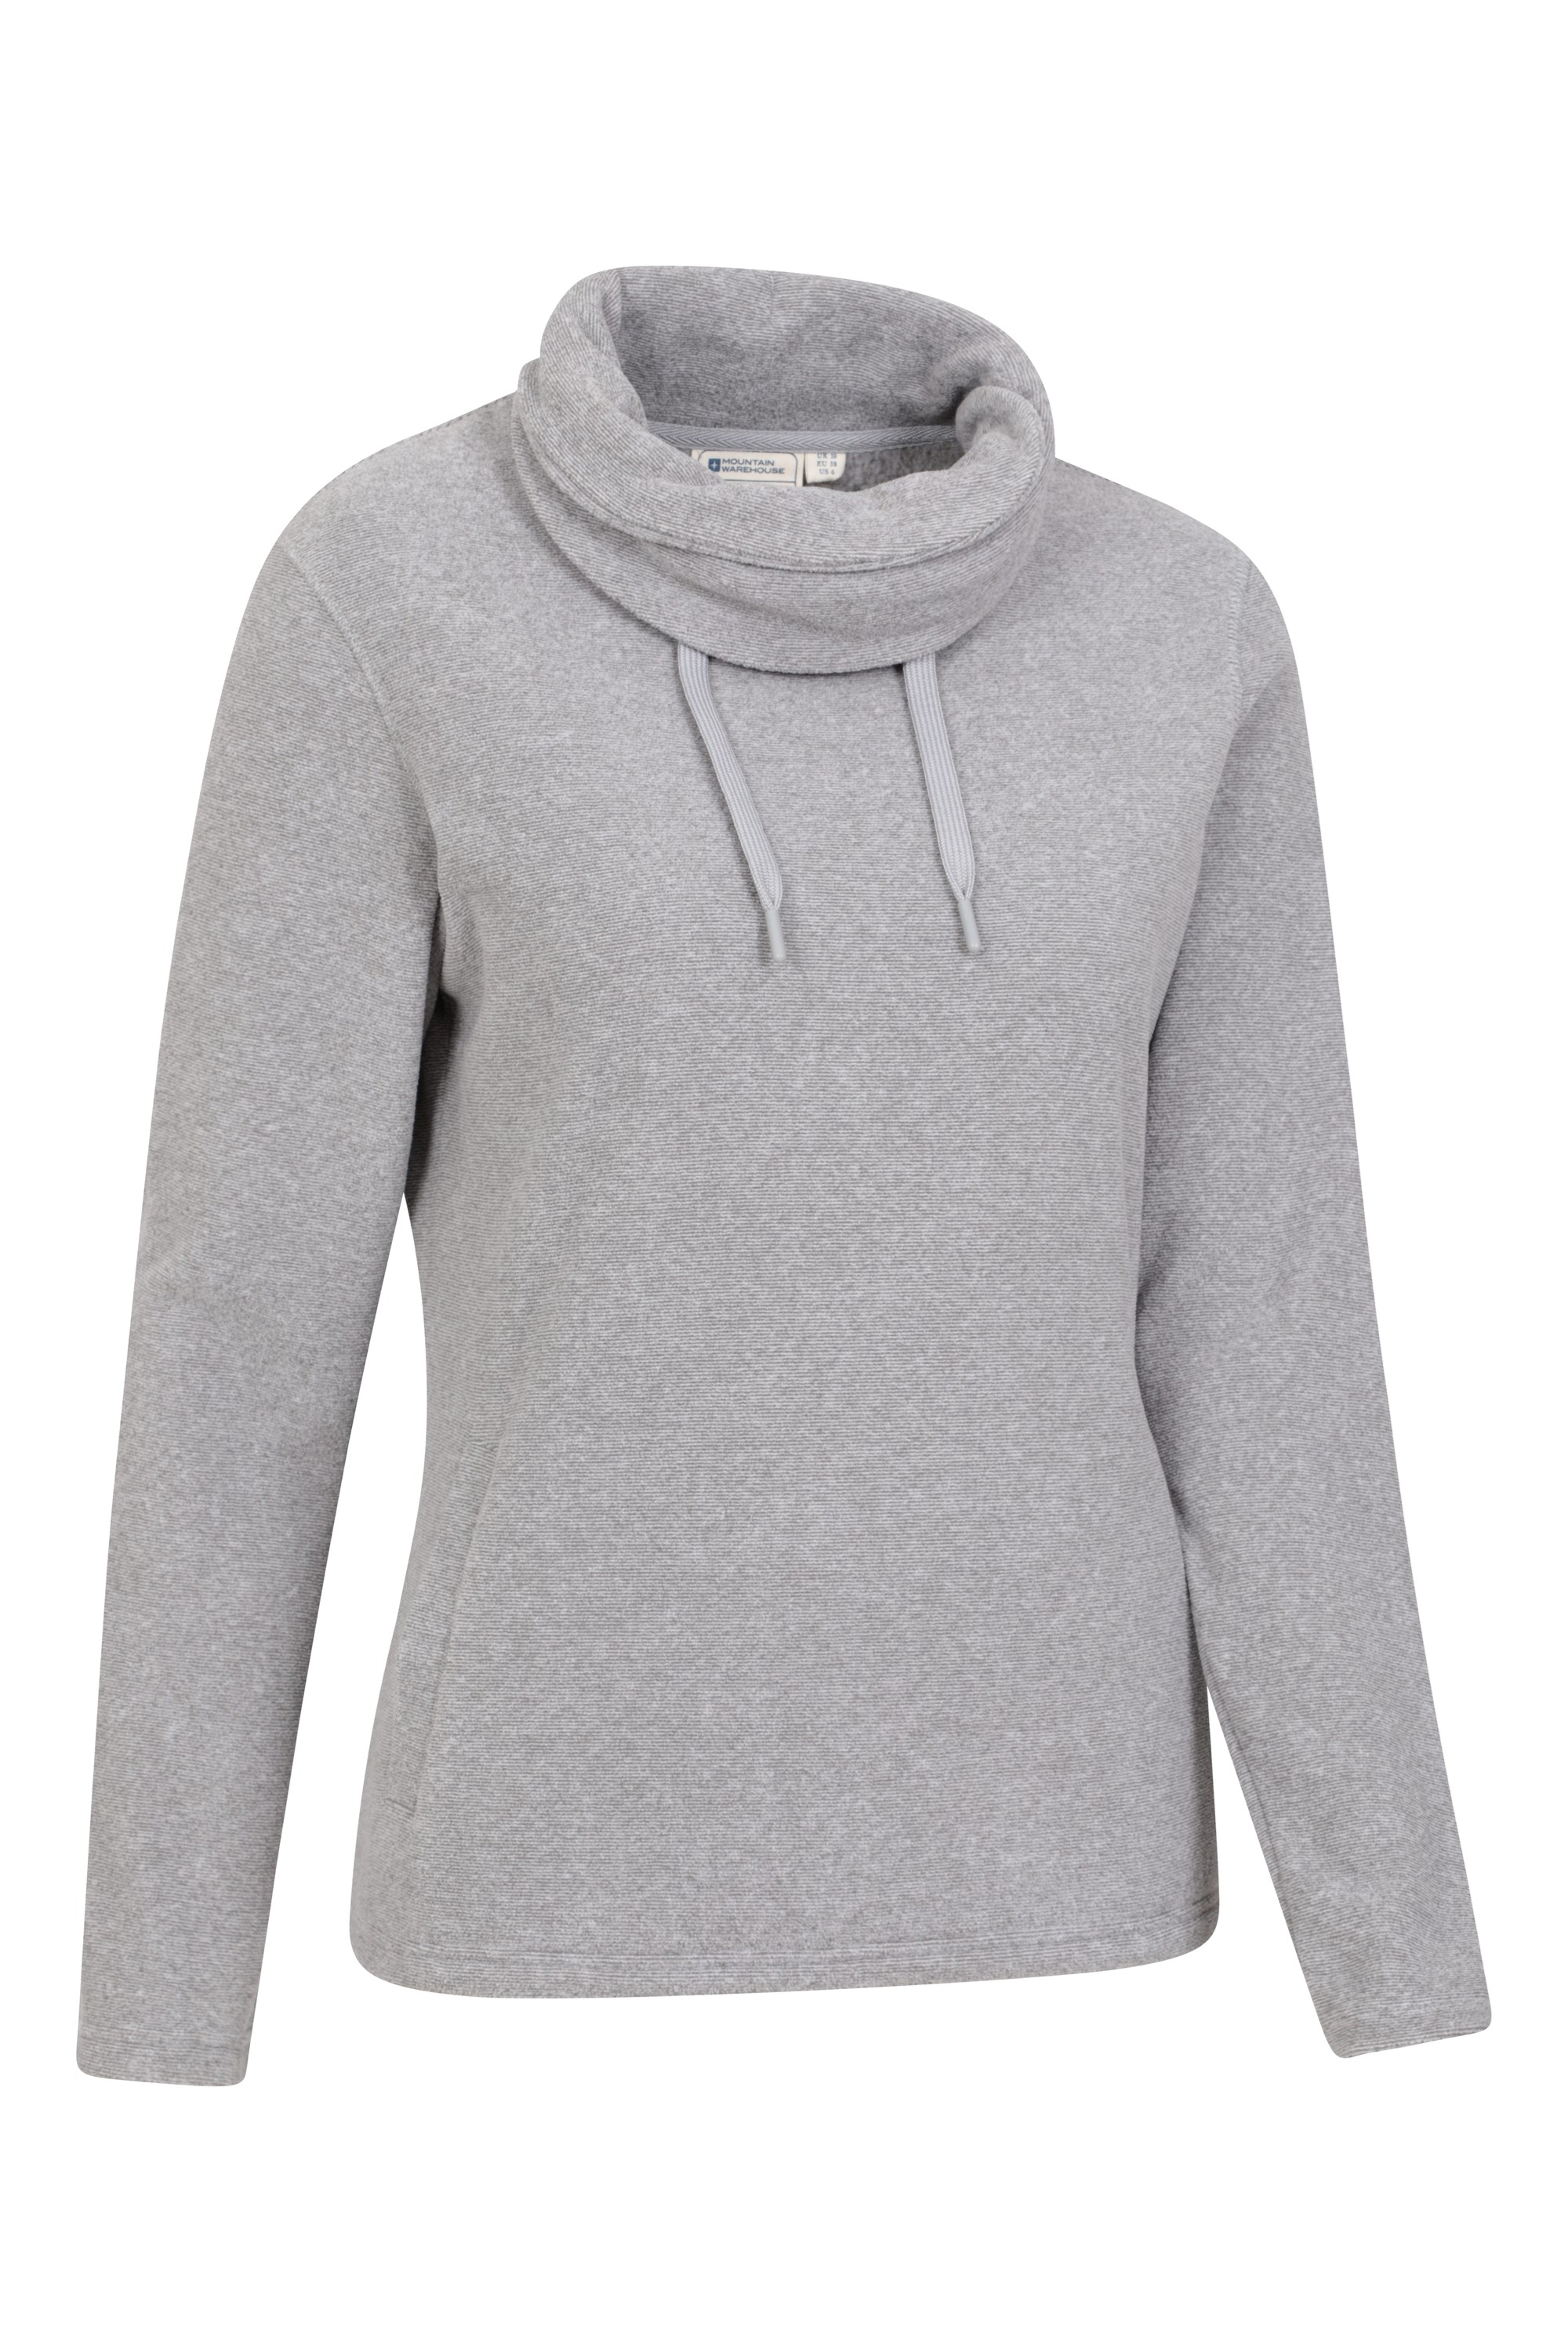 Lululemon Rest Day Pullover Sweater Sweatshirt Cowl Neck Sports Gray. Size  4?